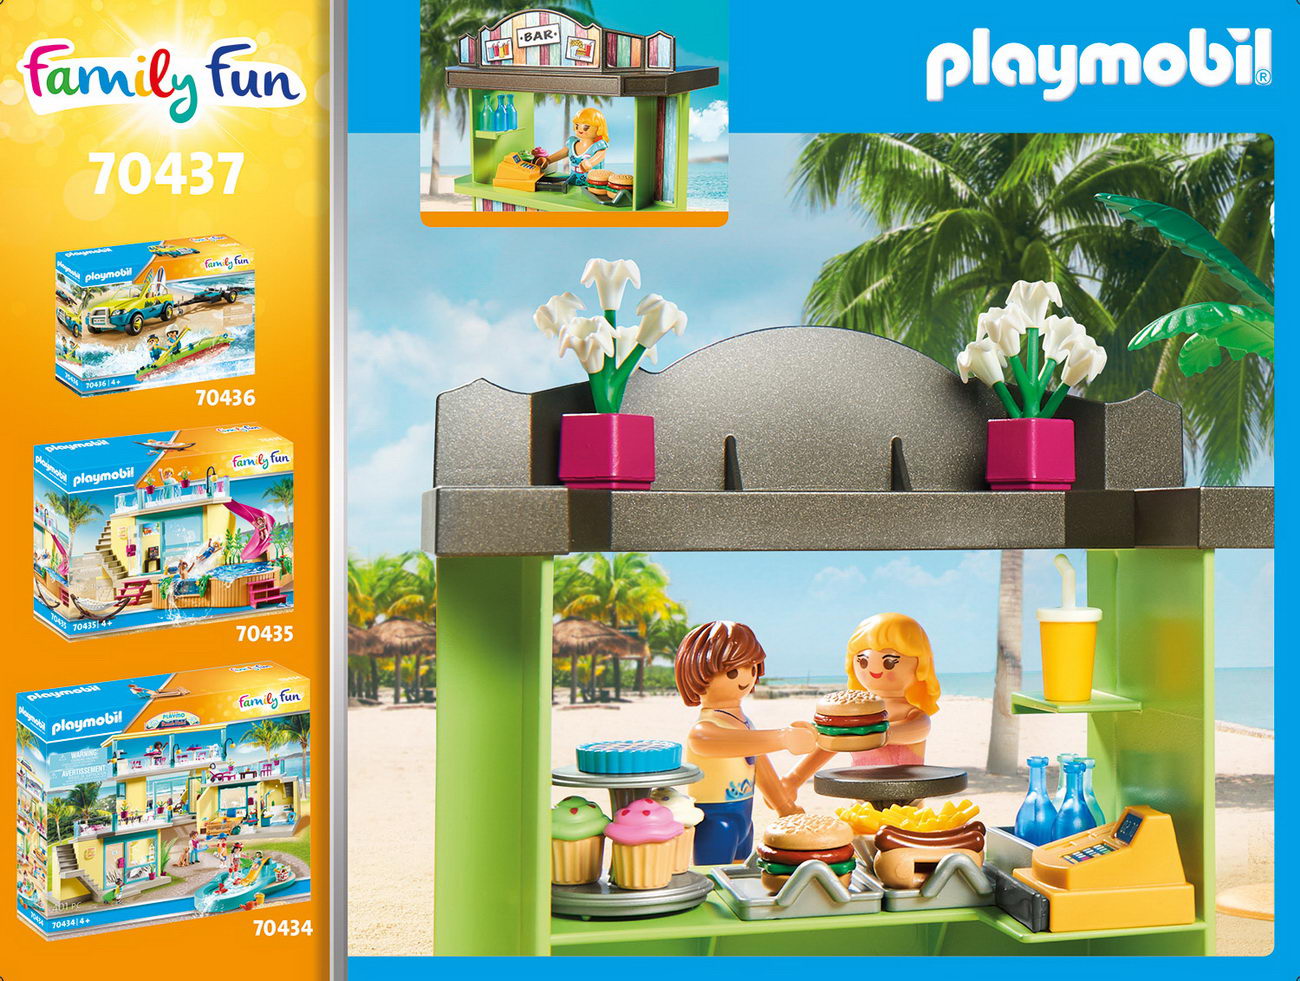 Playmobil 70437 - Strandkiosk - Family Fun